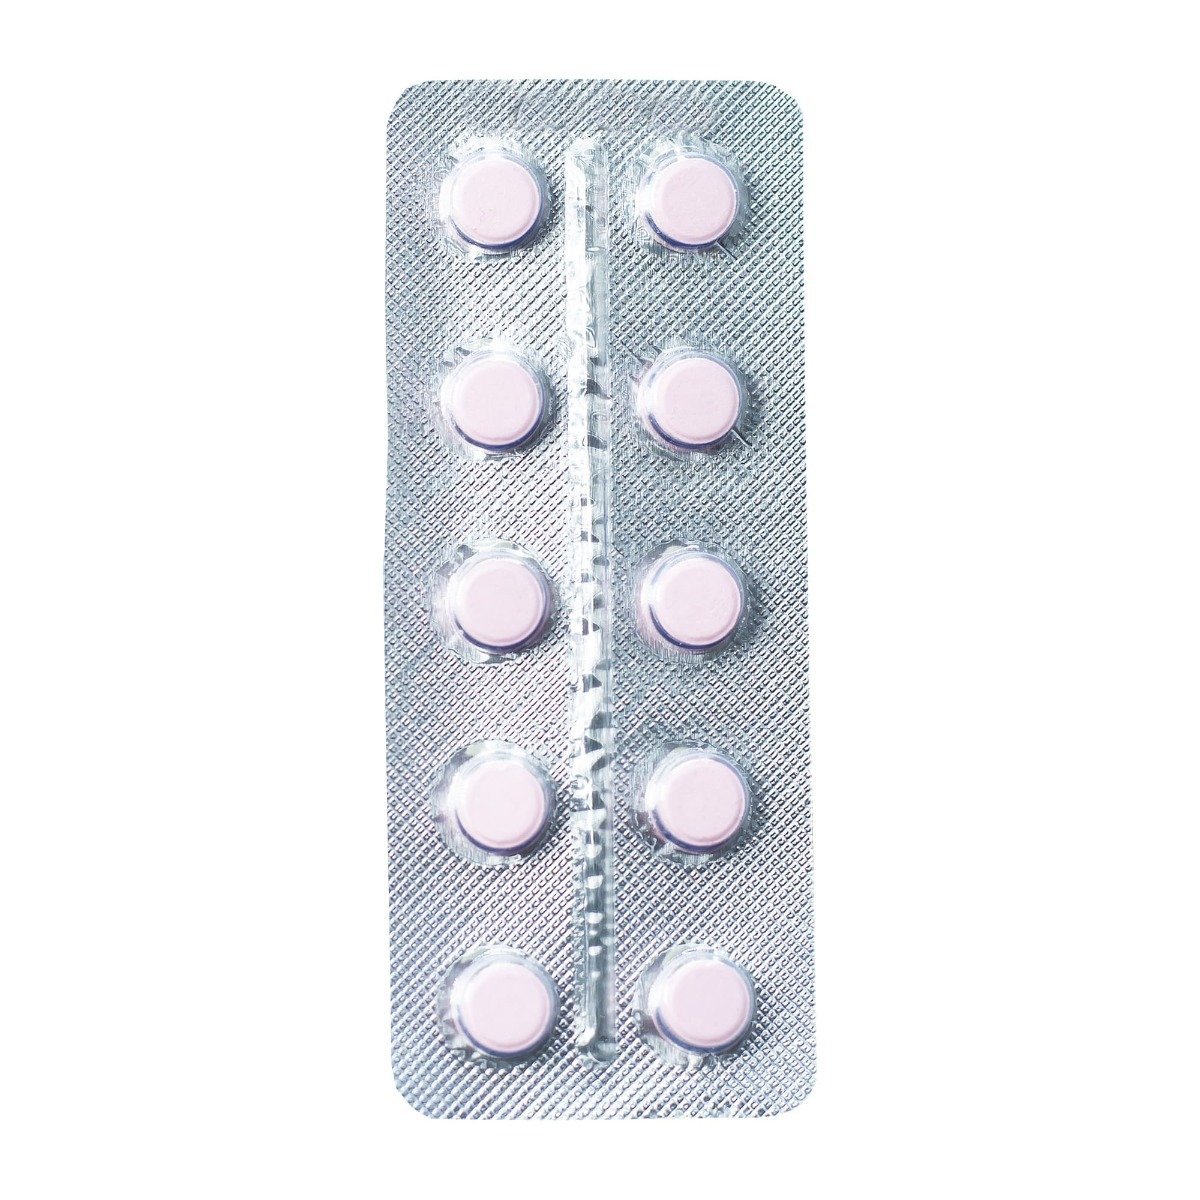 Salbovent 2 mg - 30 Tablets - Bloom Pharmacy